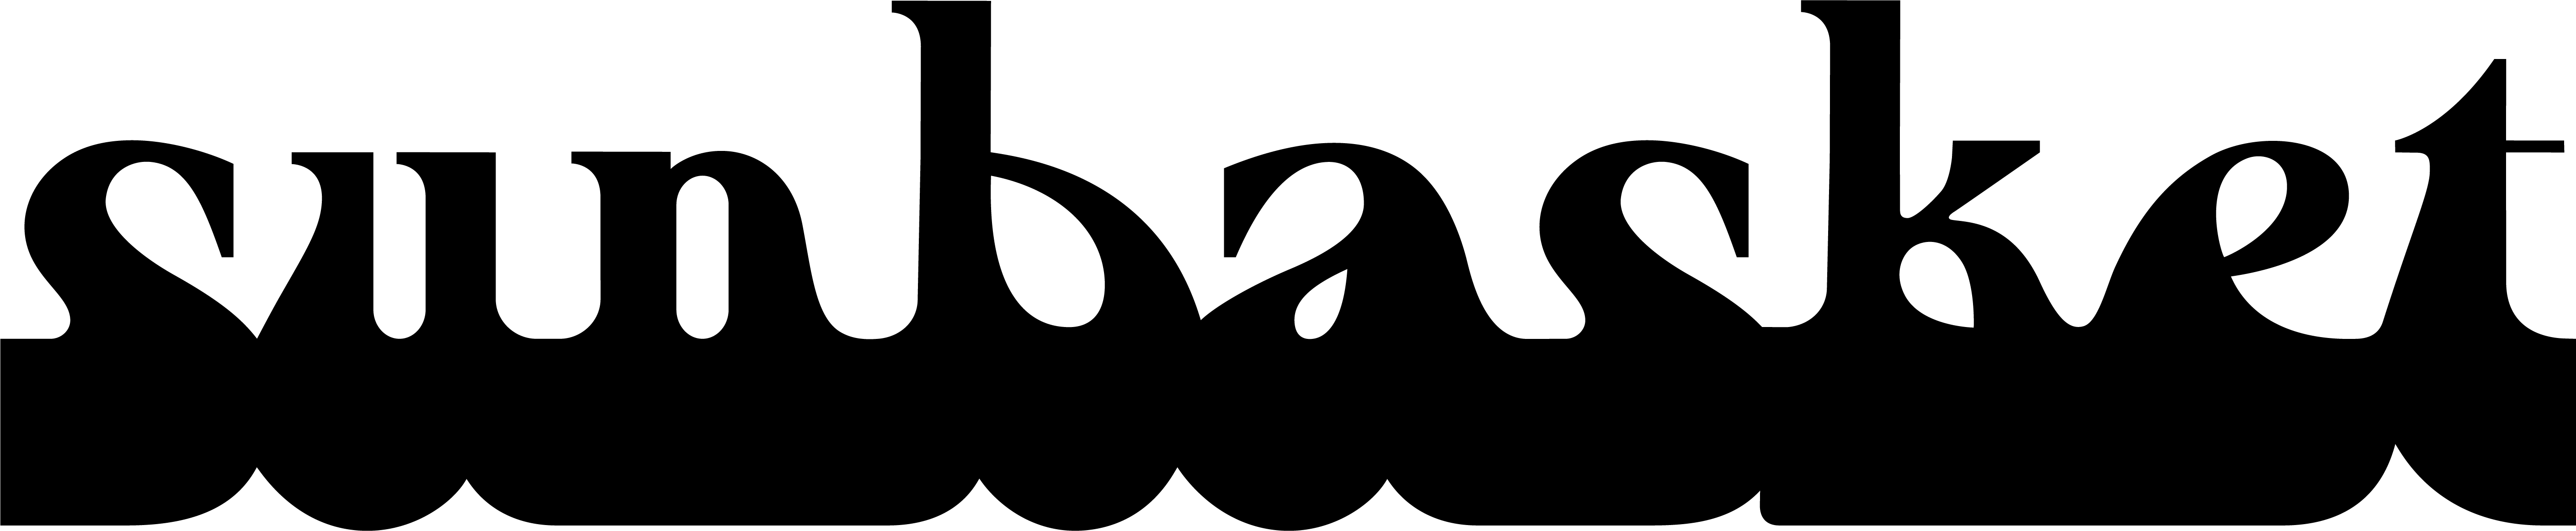 Sunbasket Logo